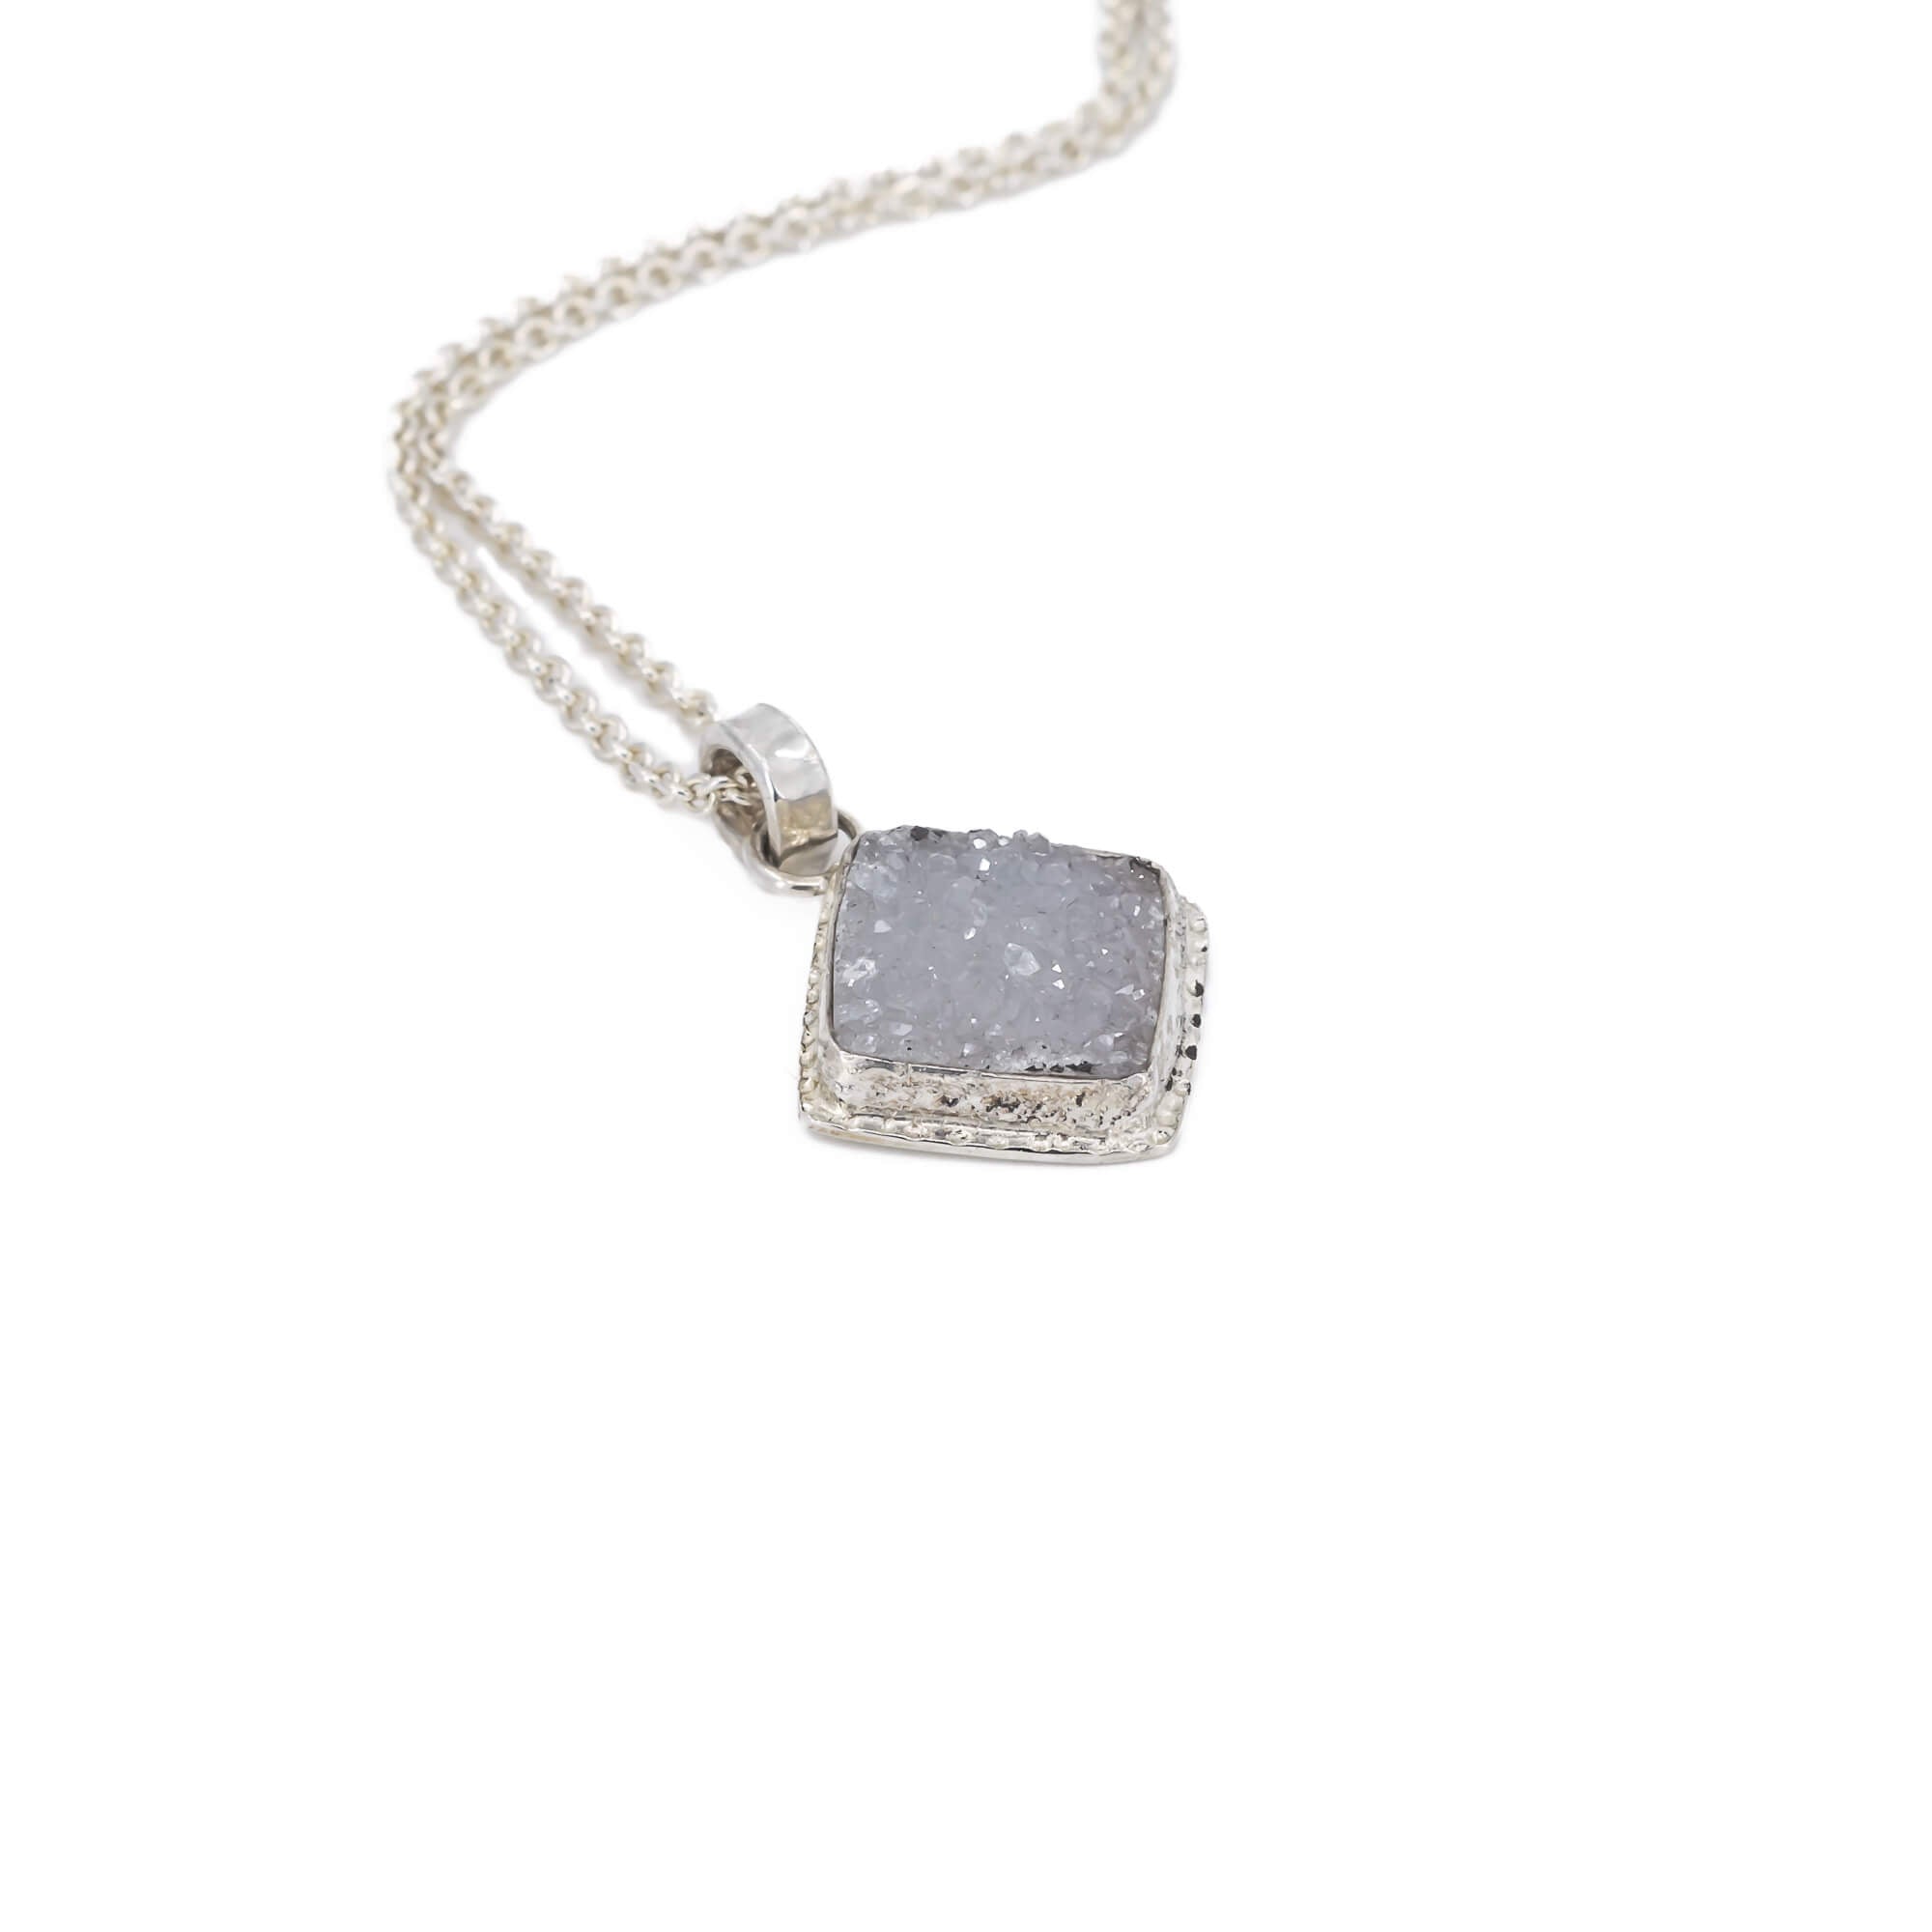 Square purple druzy necklace in sterling silver